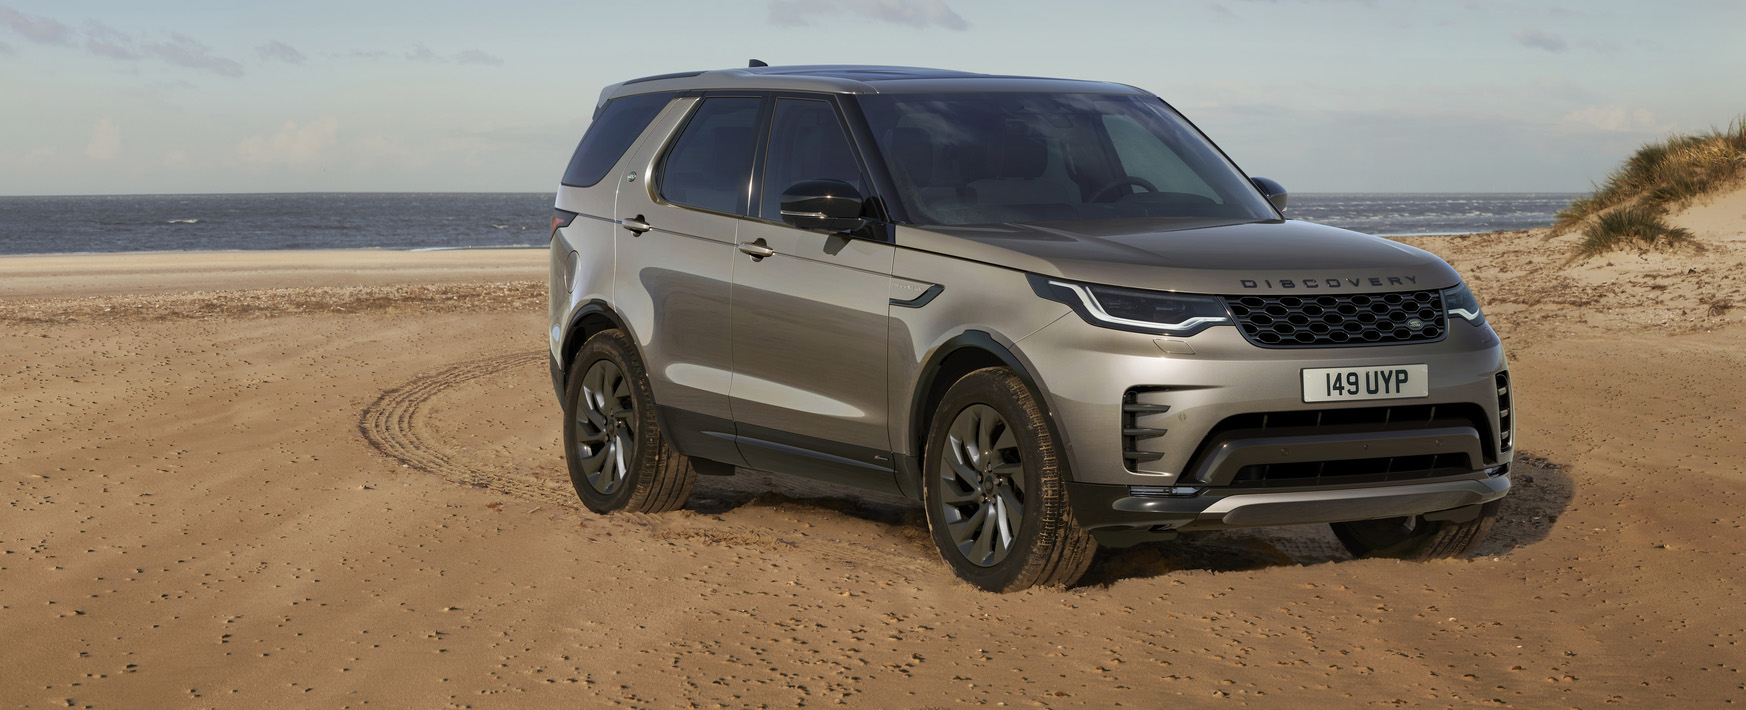 nuova Land Rover Discovery 2021 mild hybrid